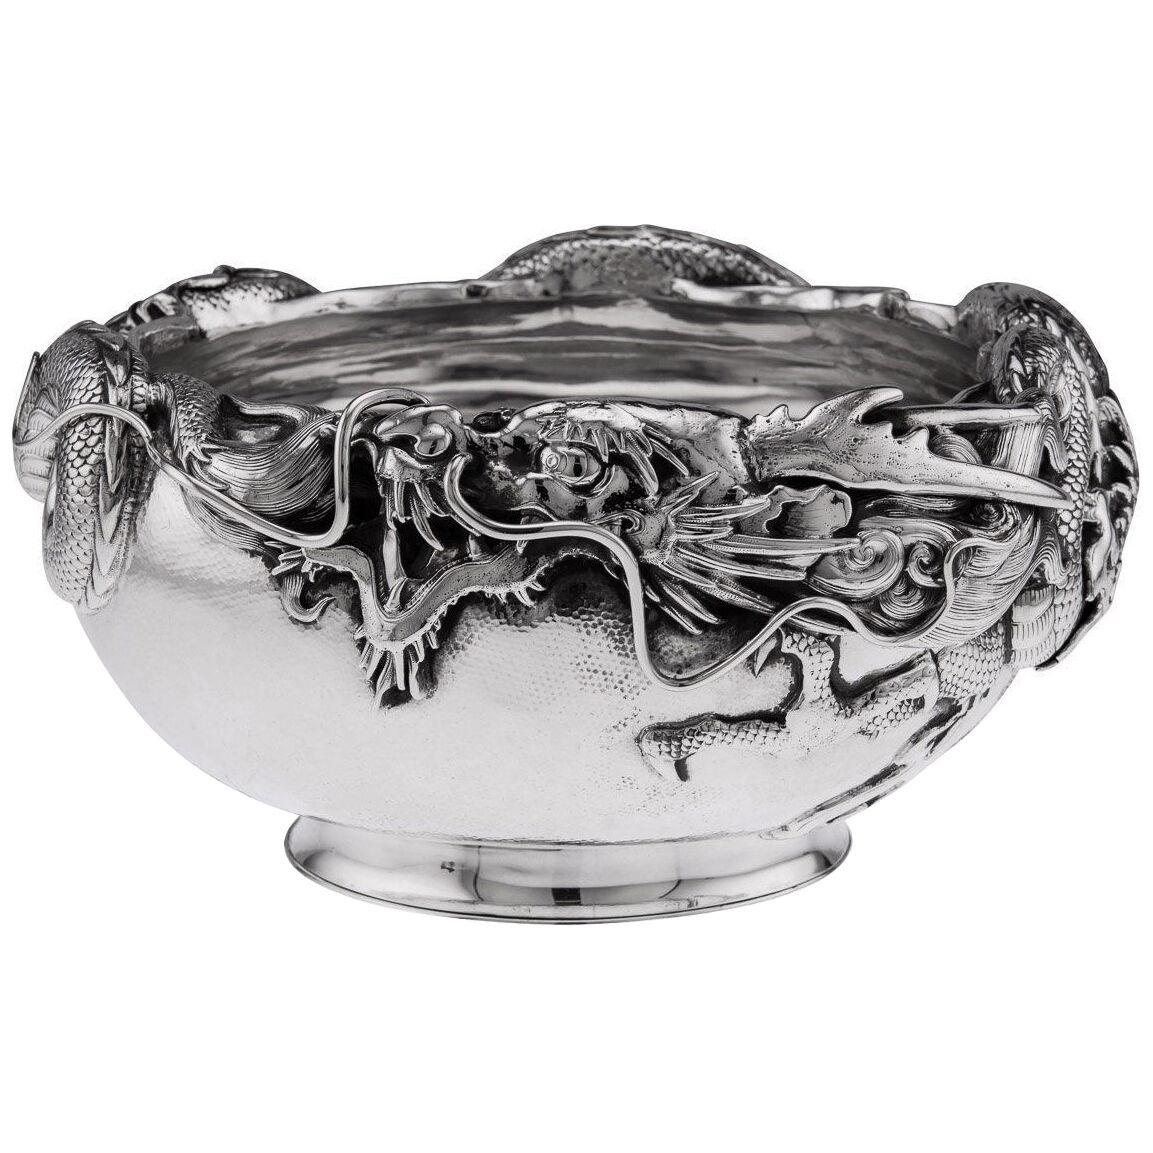 19th Century Japanese Meiji Period Solid Silver Massive Dragon Bowl, c.1890